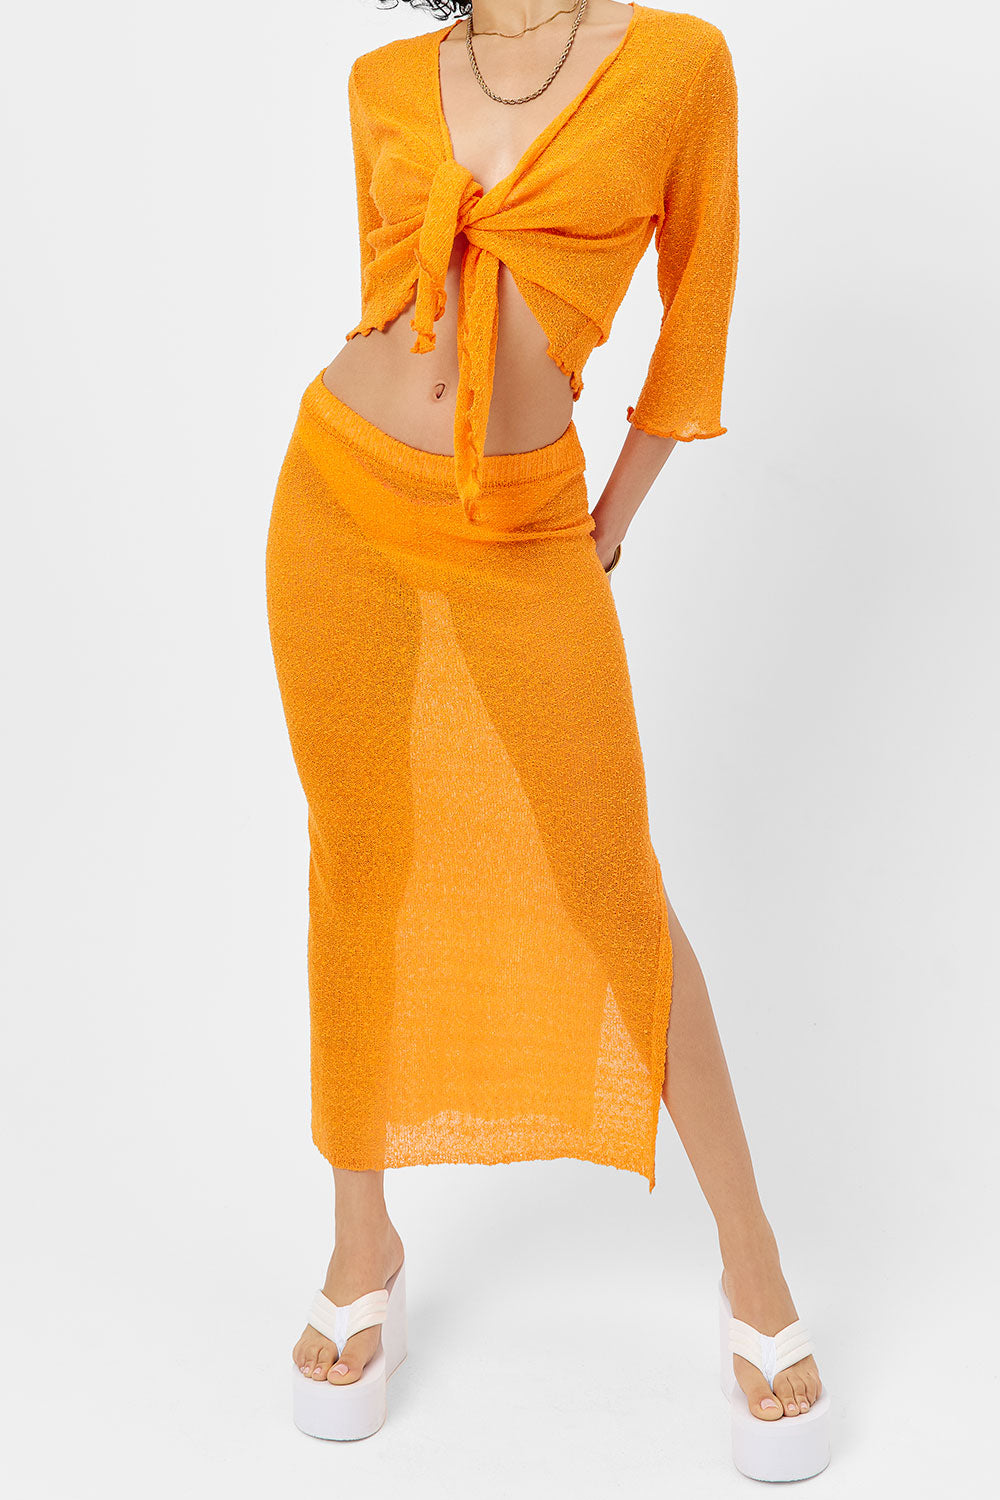 Opal Knit Midi Skirt - Orange Novelty